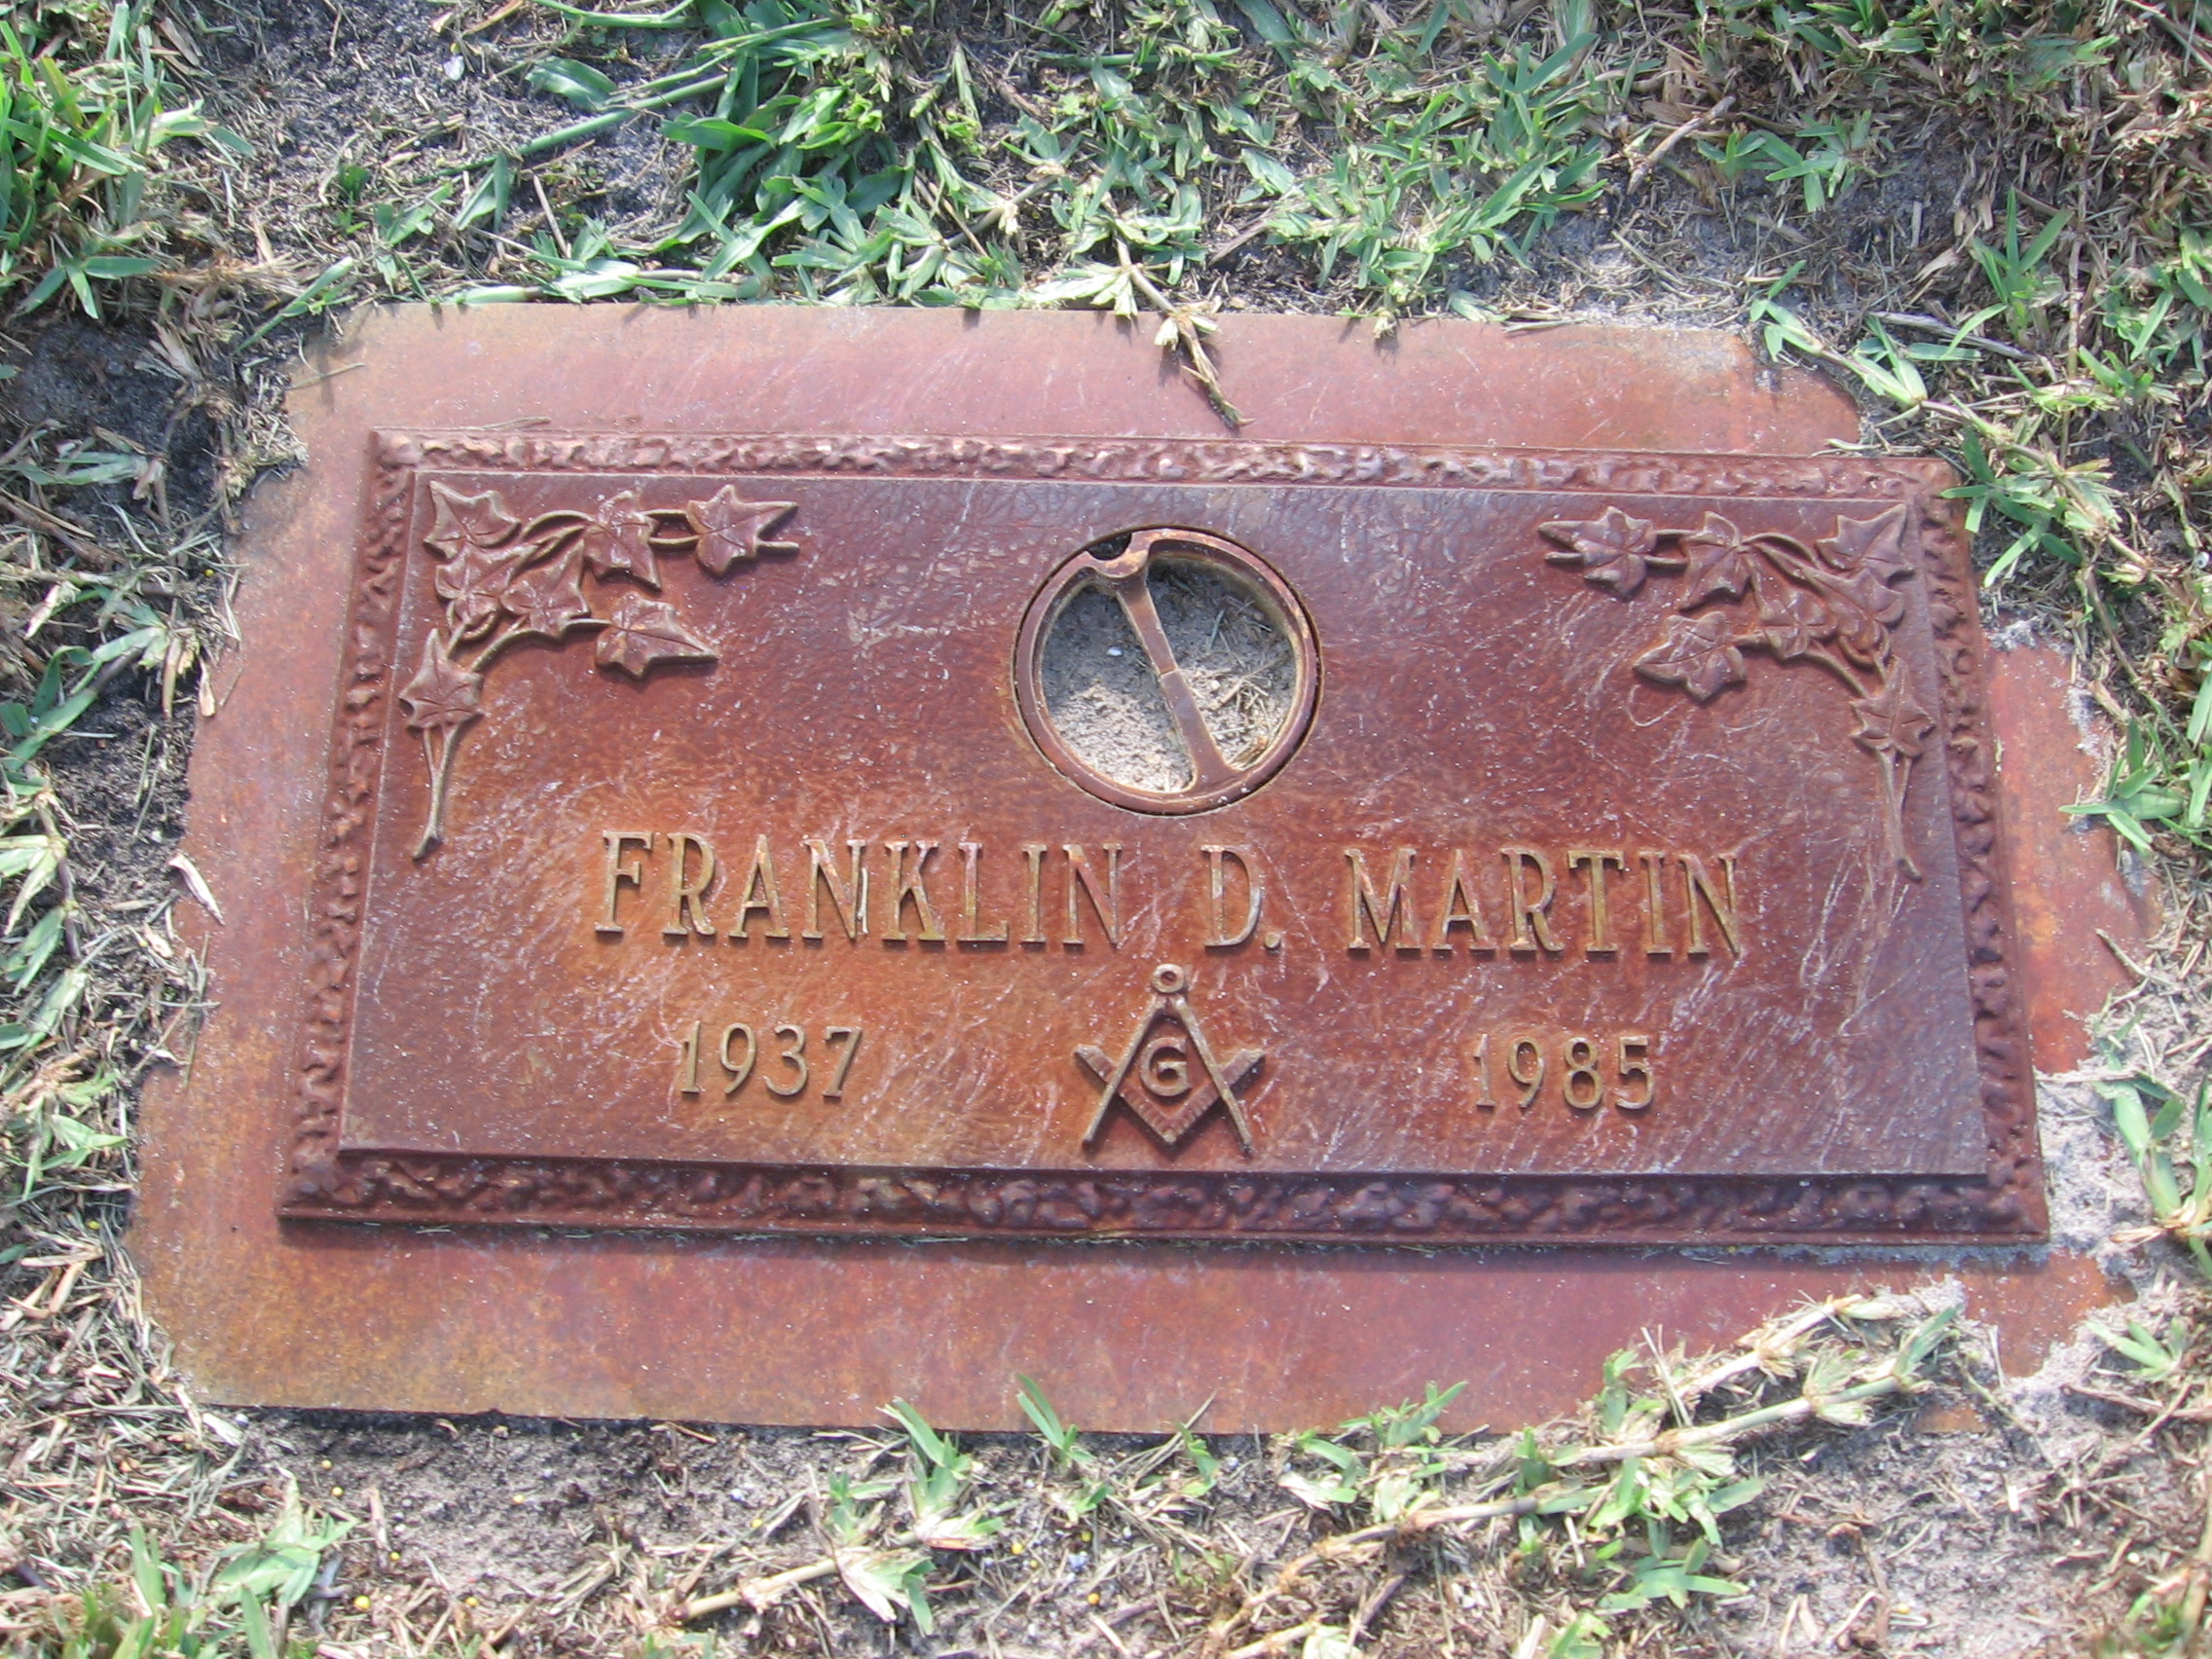 Franklin D Martin